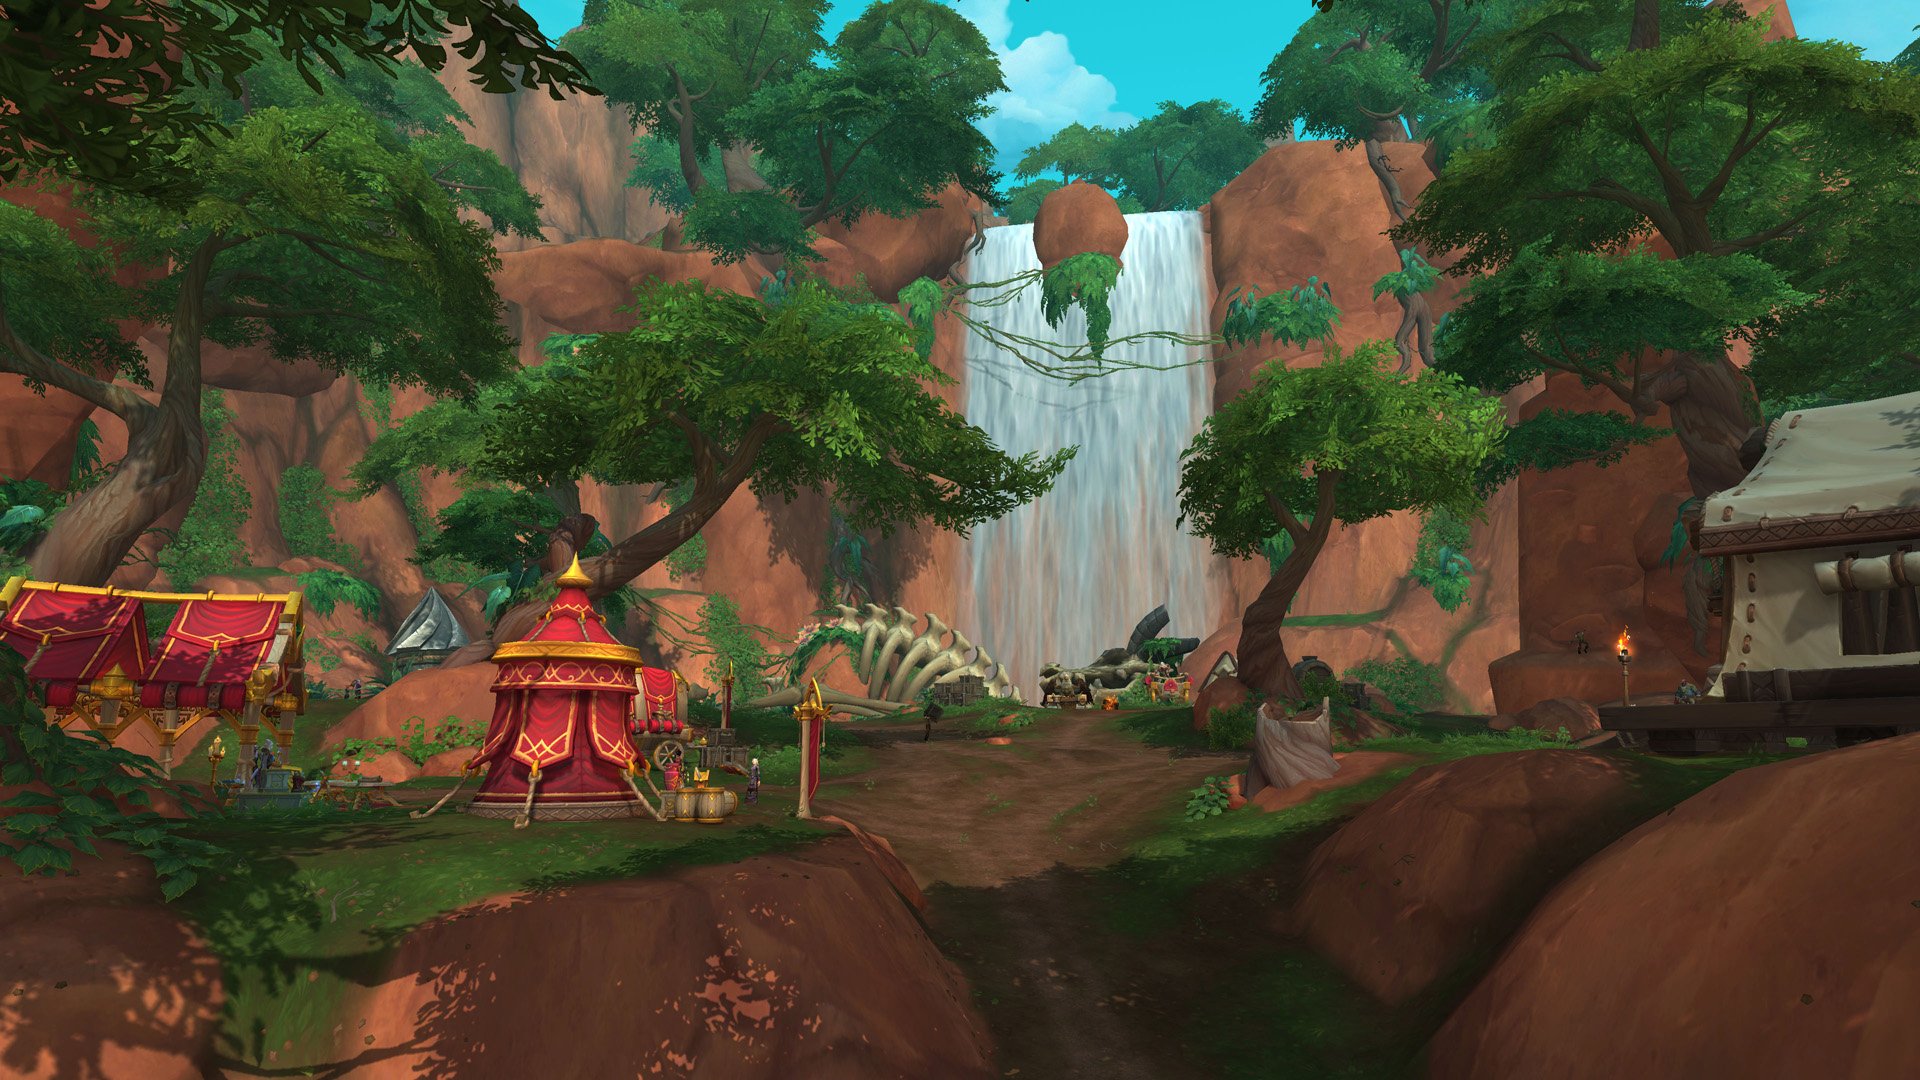 World of Warcraft: Dragonflight, Waking Shores Dragonscale Basecamp